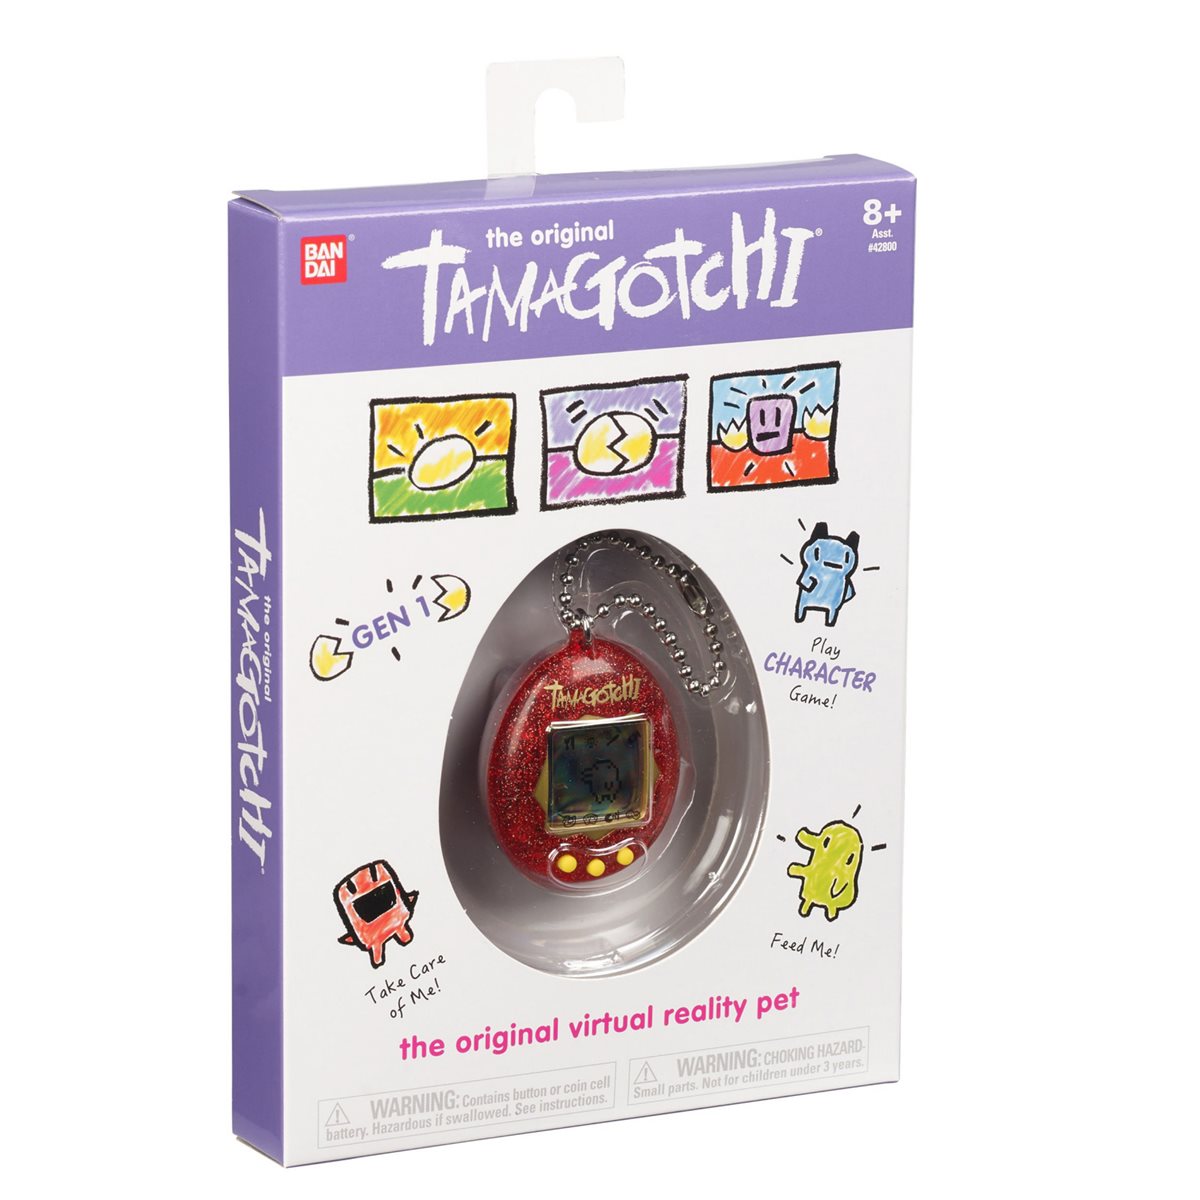 Tamagotchi Red Electronic Pet Game, Toys \ Games